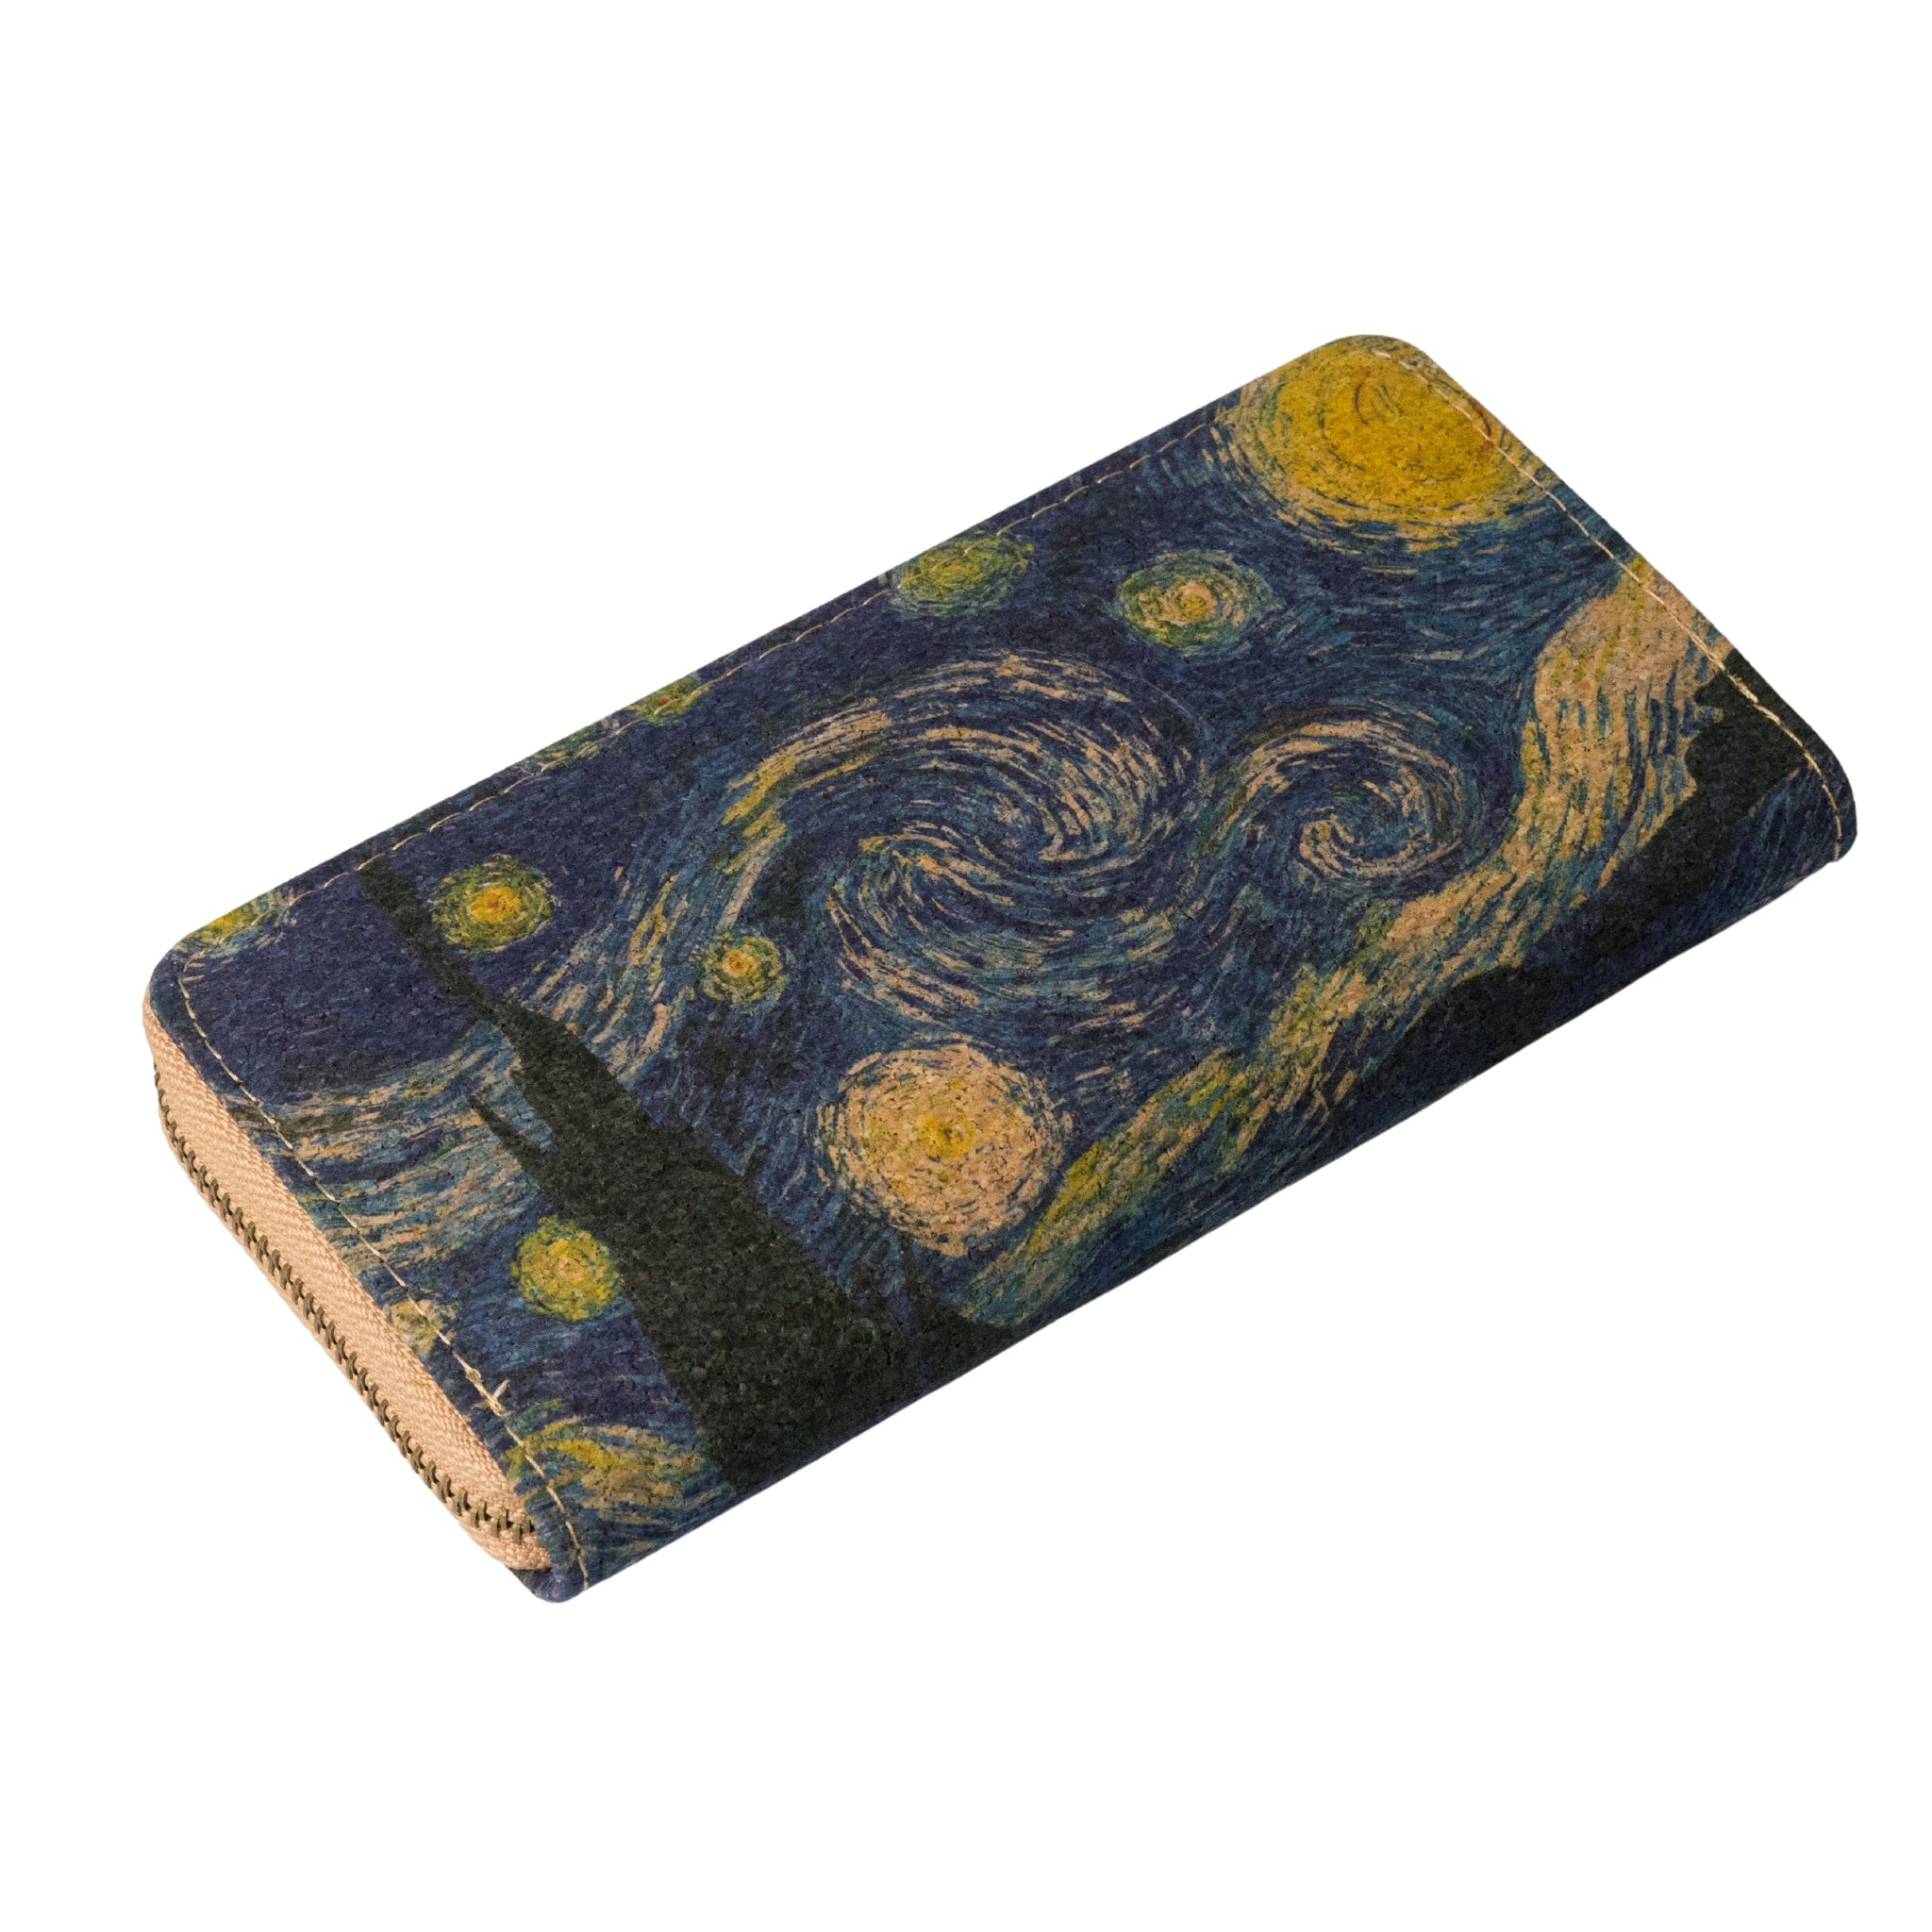 Starry Night Wallet